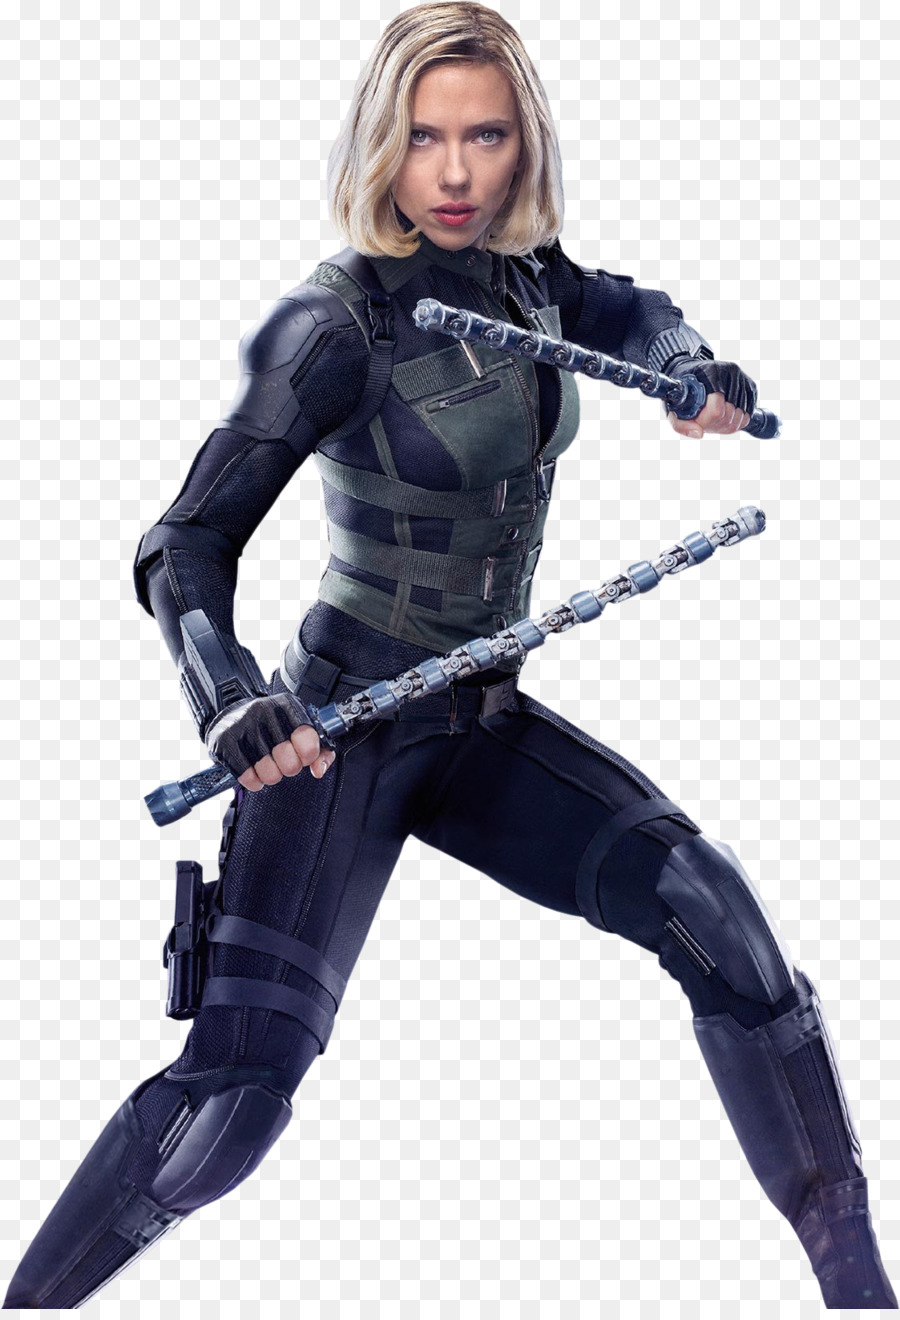 Black Widow Avengers: Infinity War Scarlett Johansson Hulk Captain America - agent romanoff scarlett johansson png download - 900*1309 - Free Transparent Black Widow png Download.